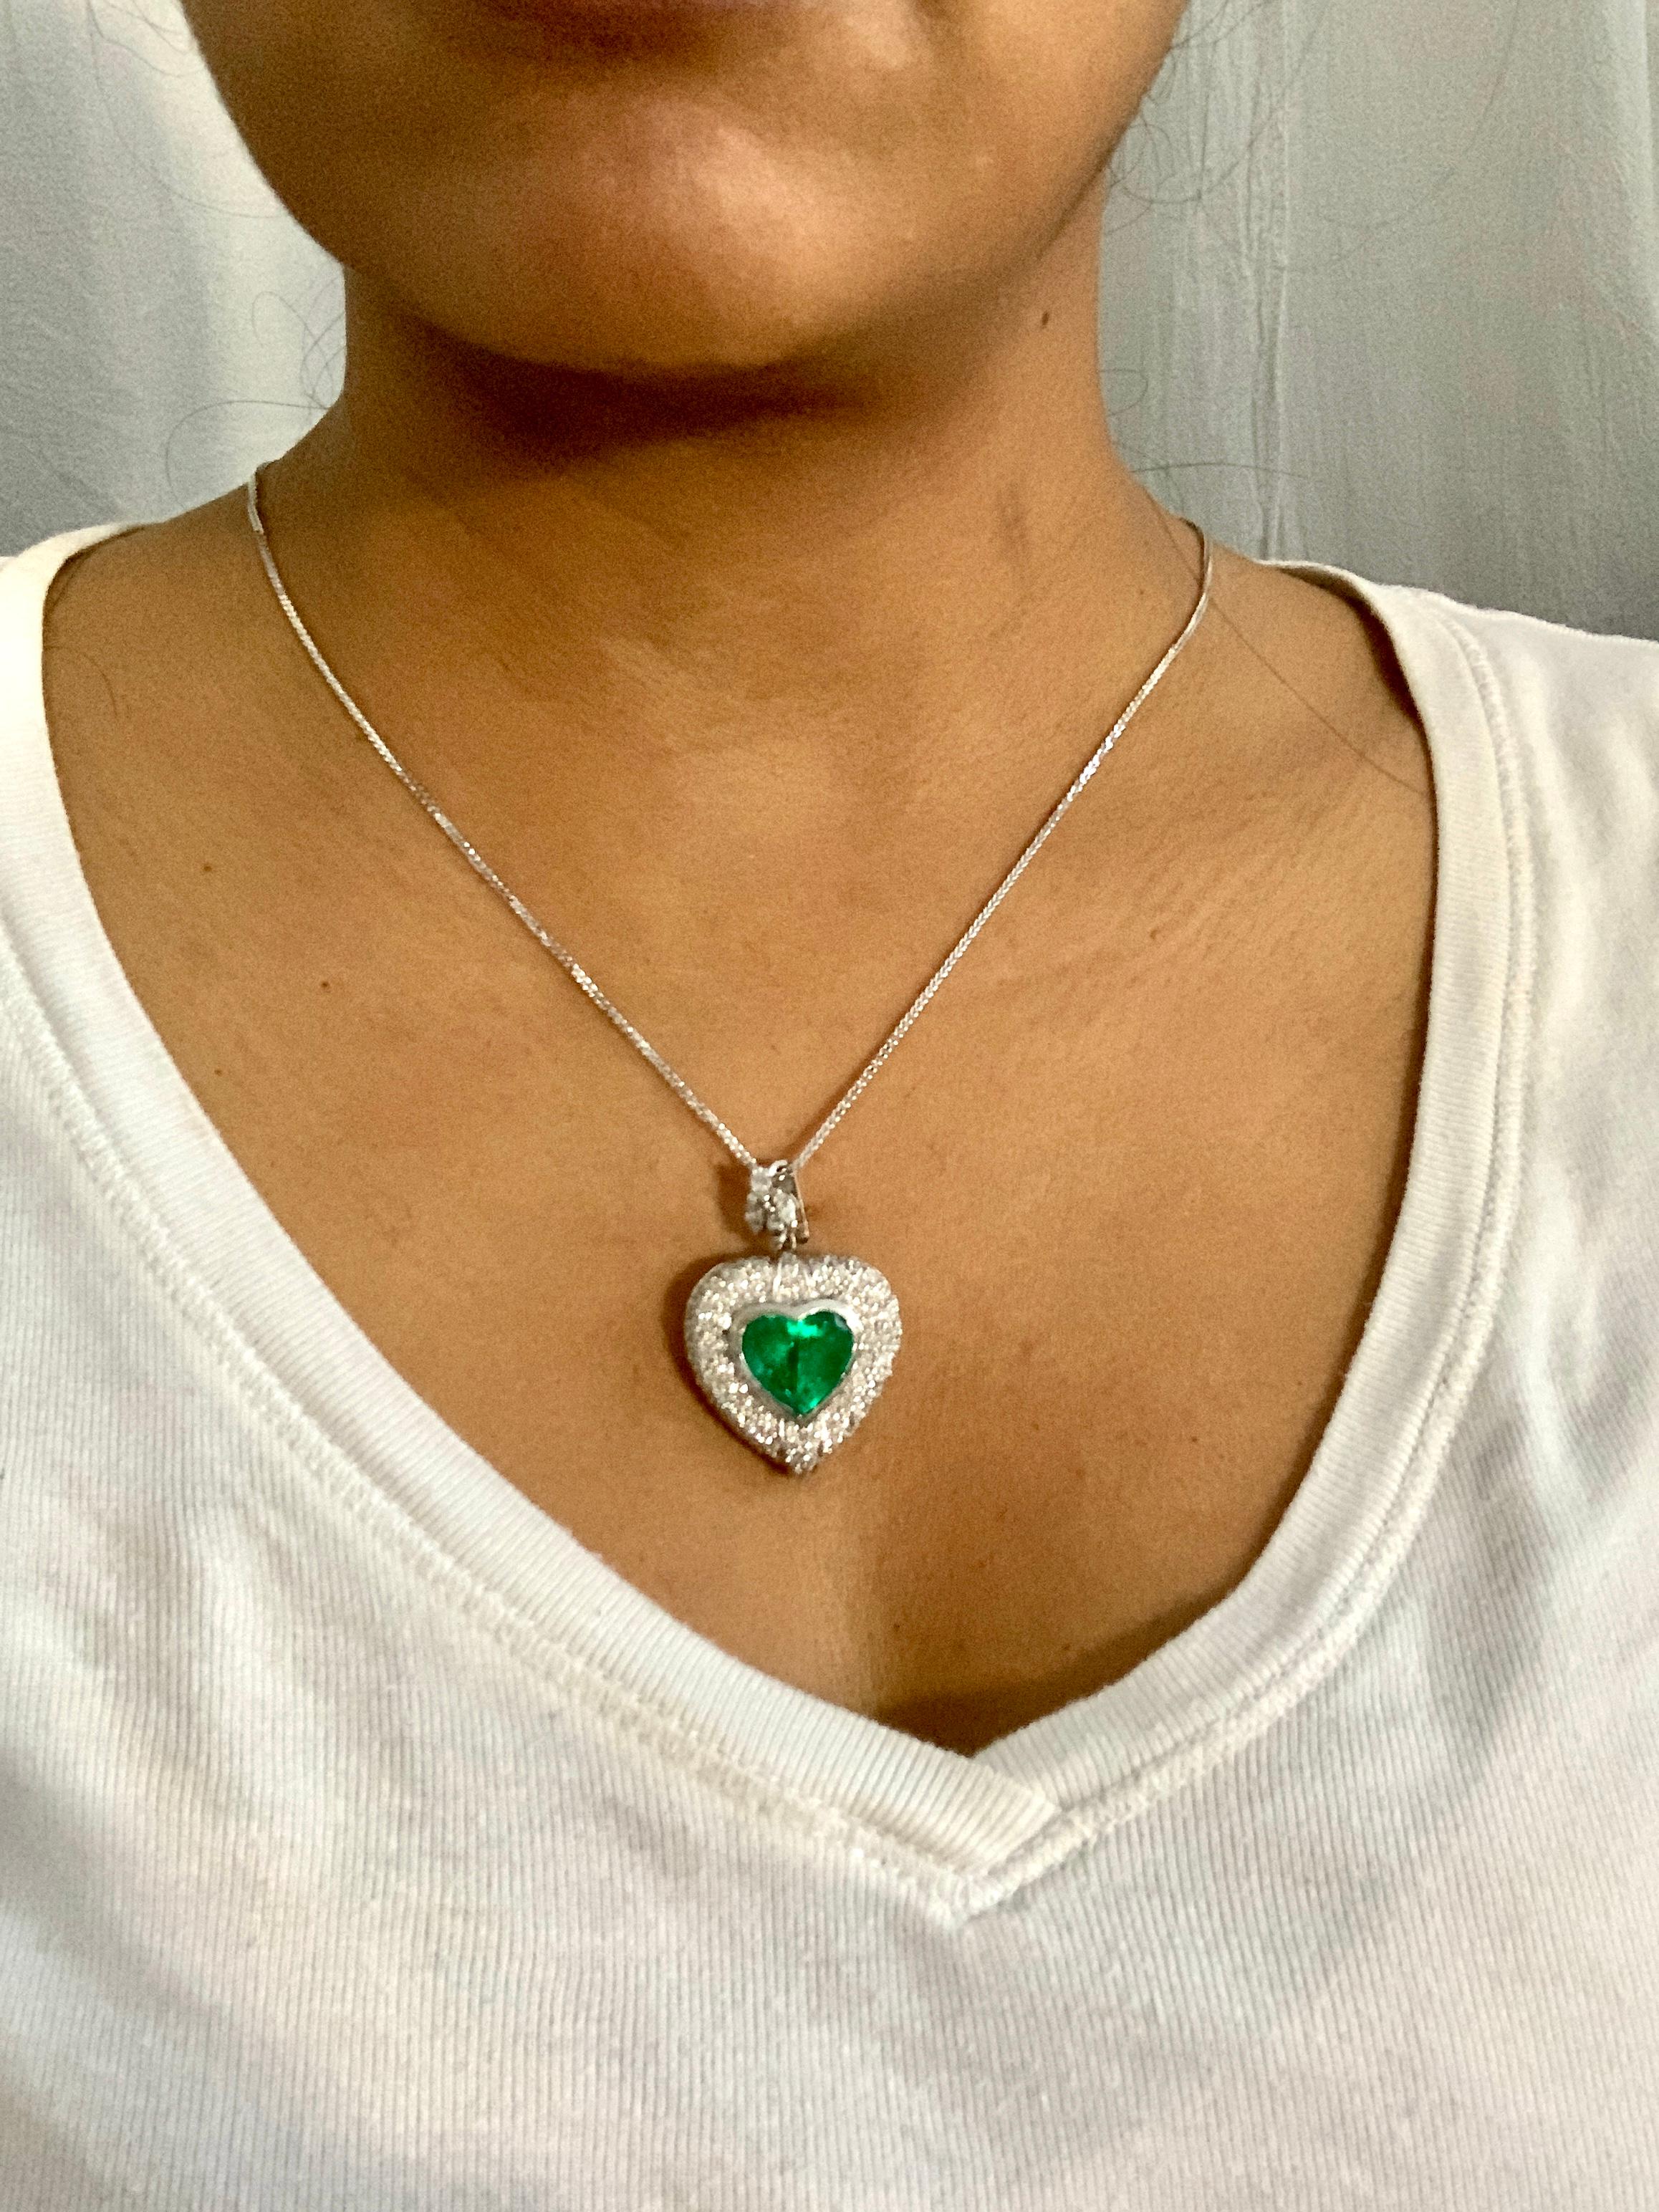 5 Carat Heart Shape Colombian Emerald and Diamond Pendant Necklace Enhancer For Sale 4